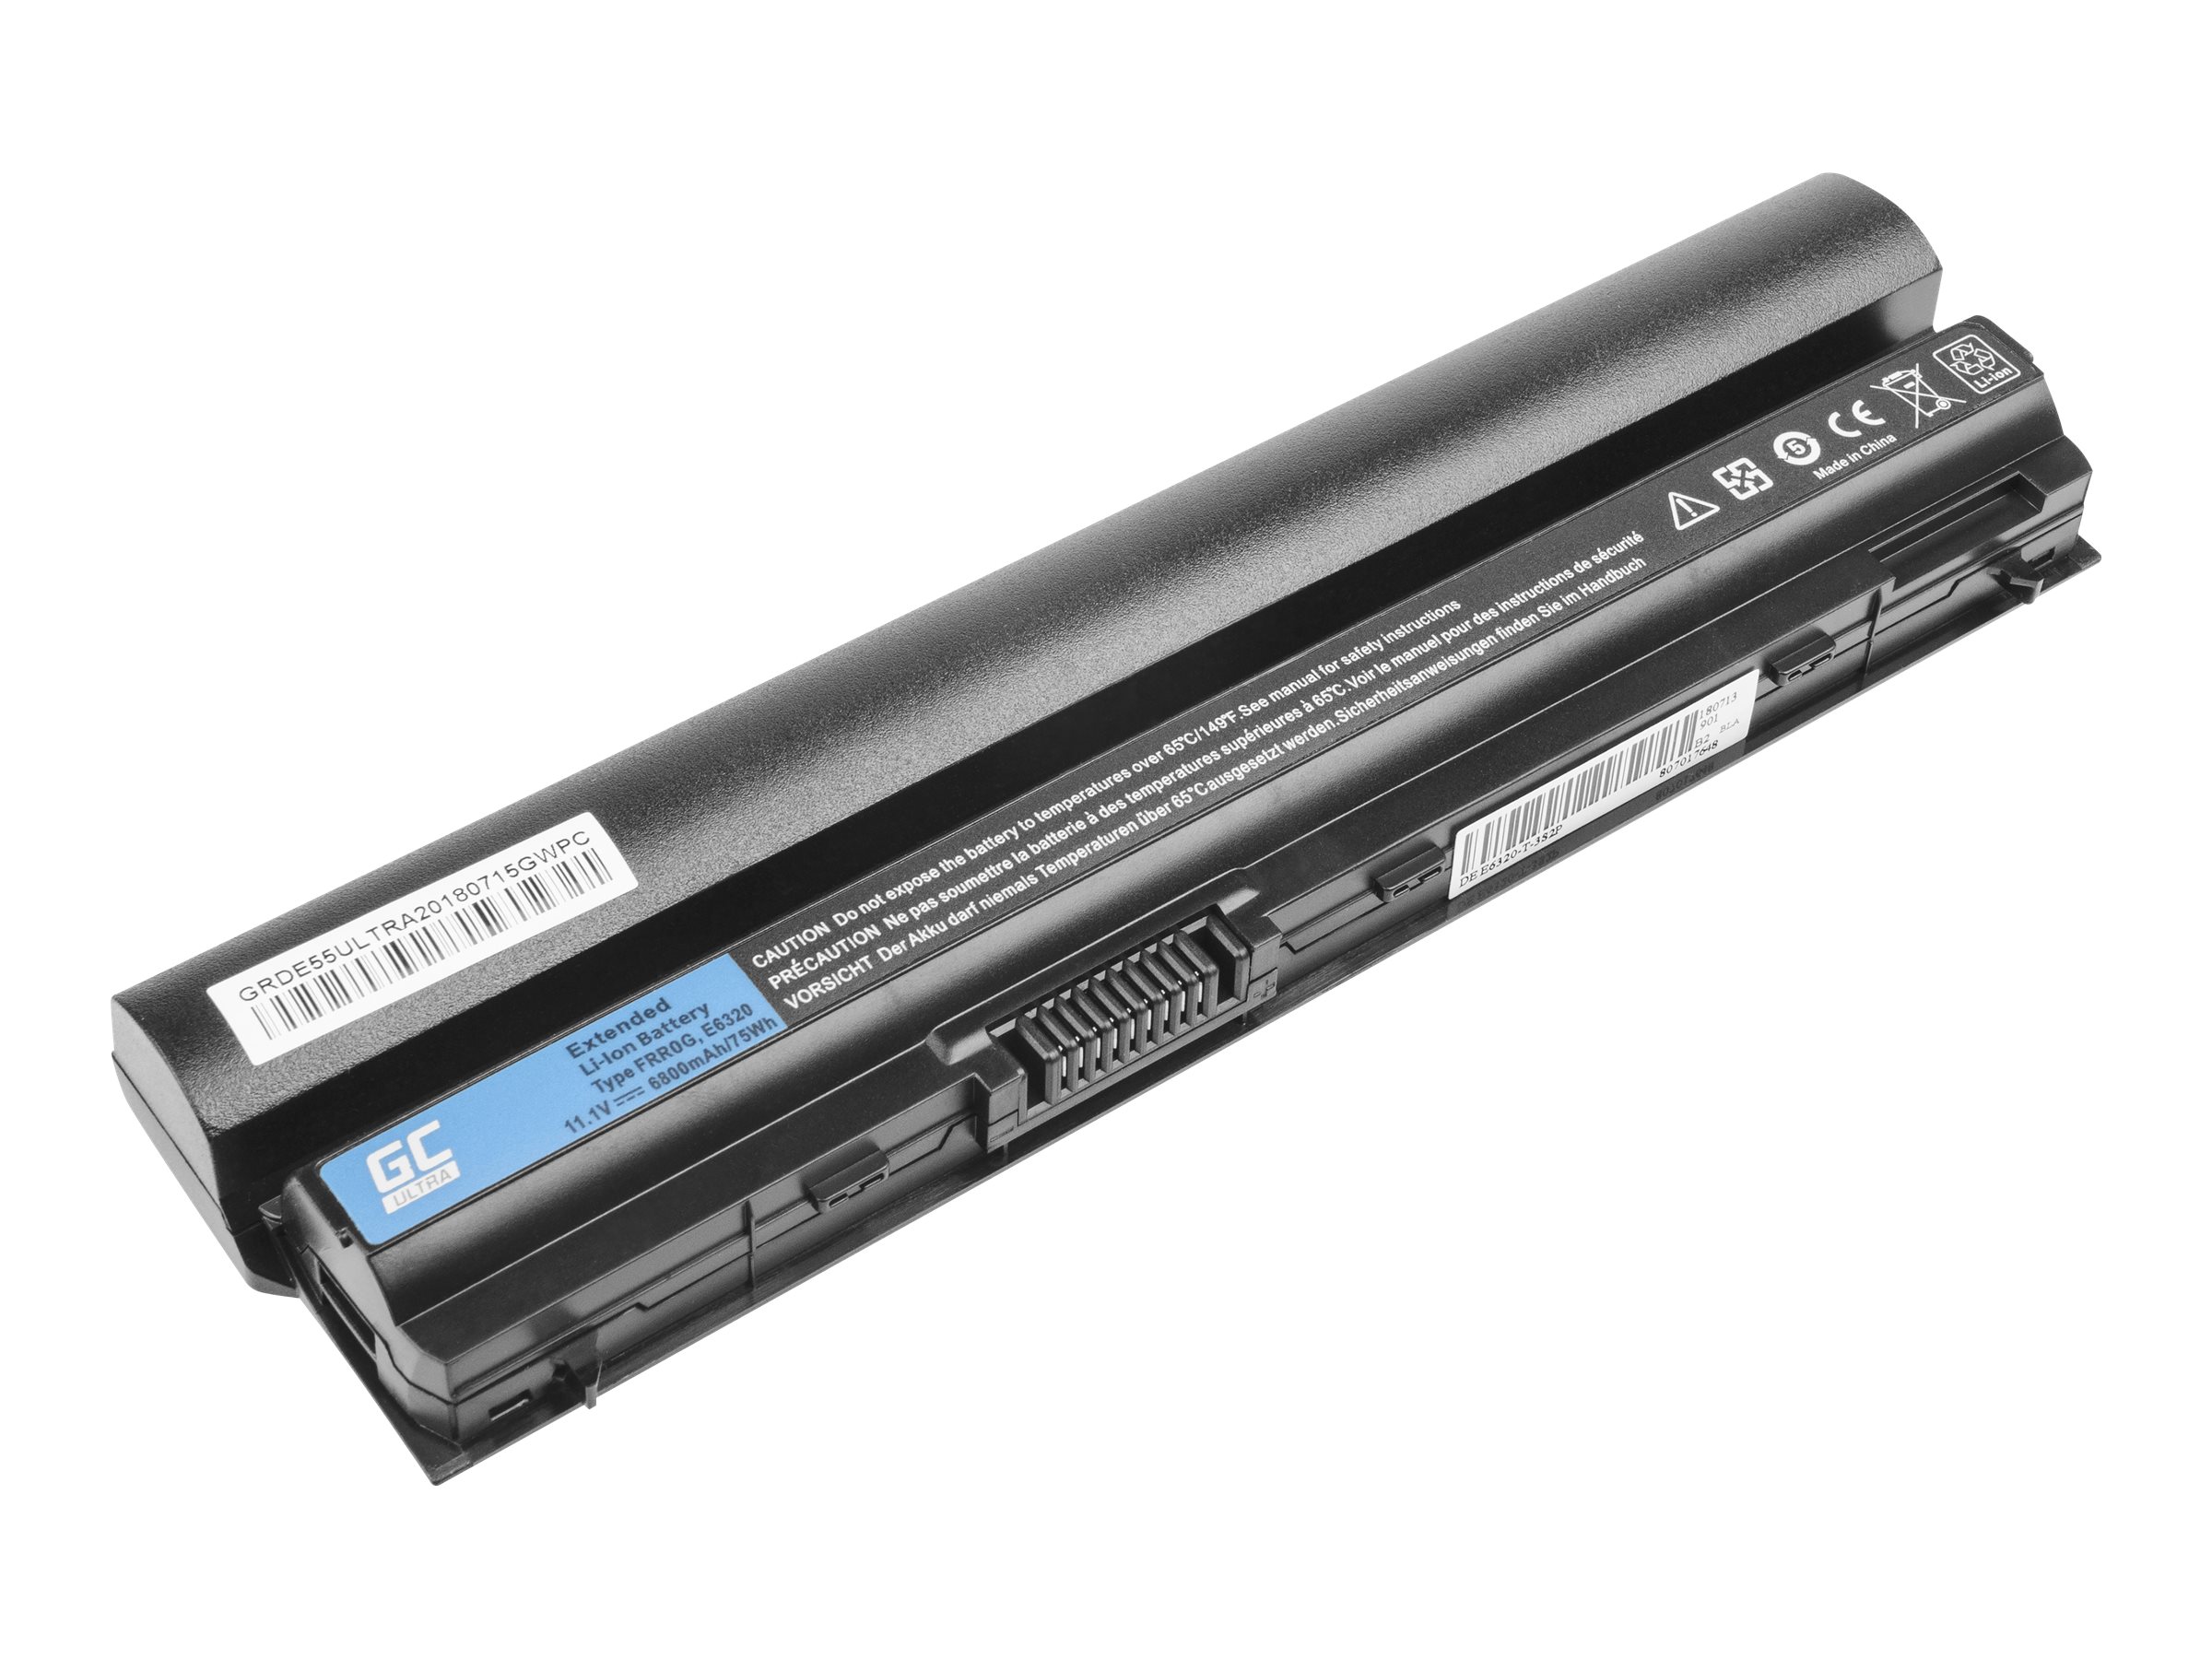 GREENCELL Battery for Dell E6120 E6220 11.1V 6 cell